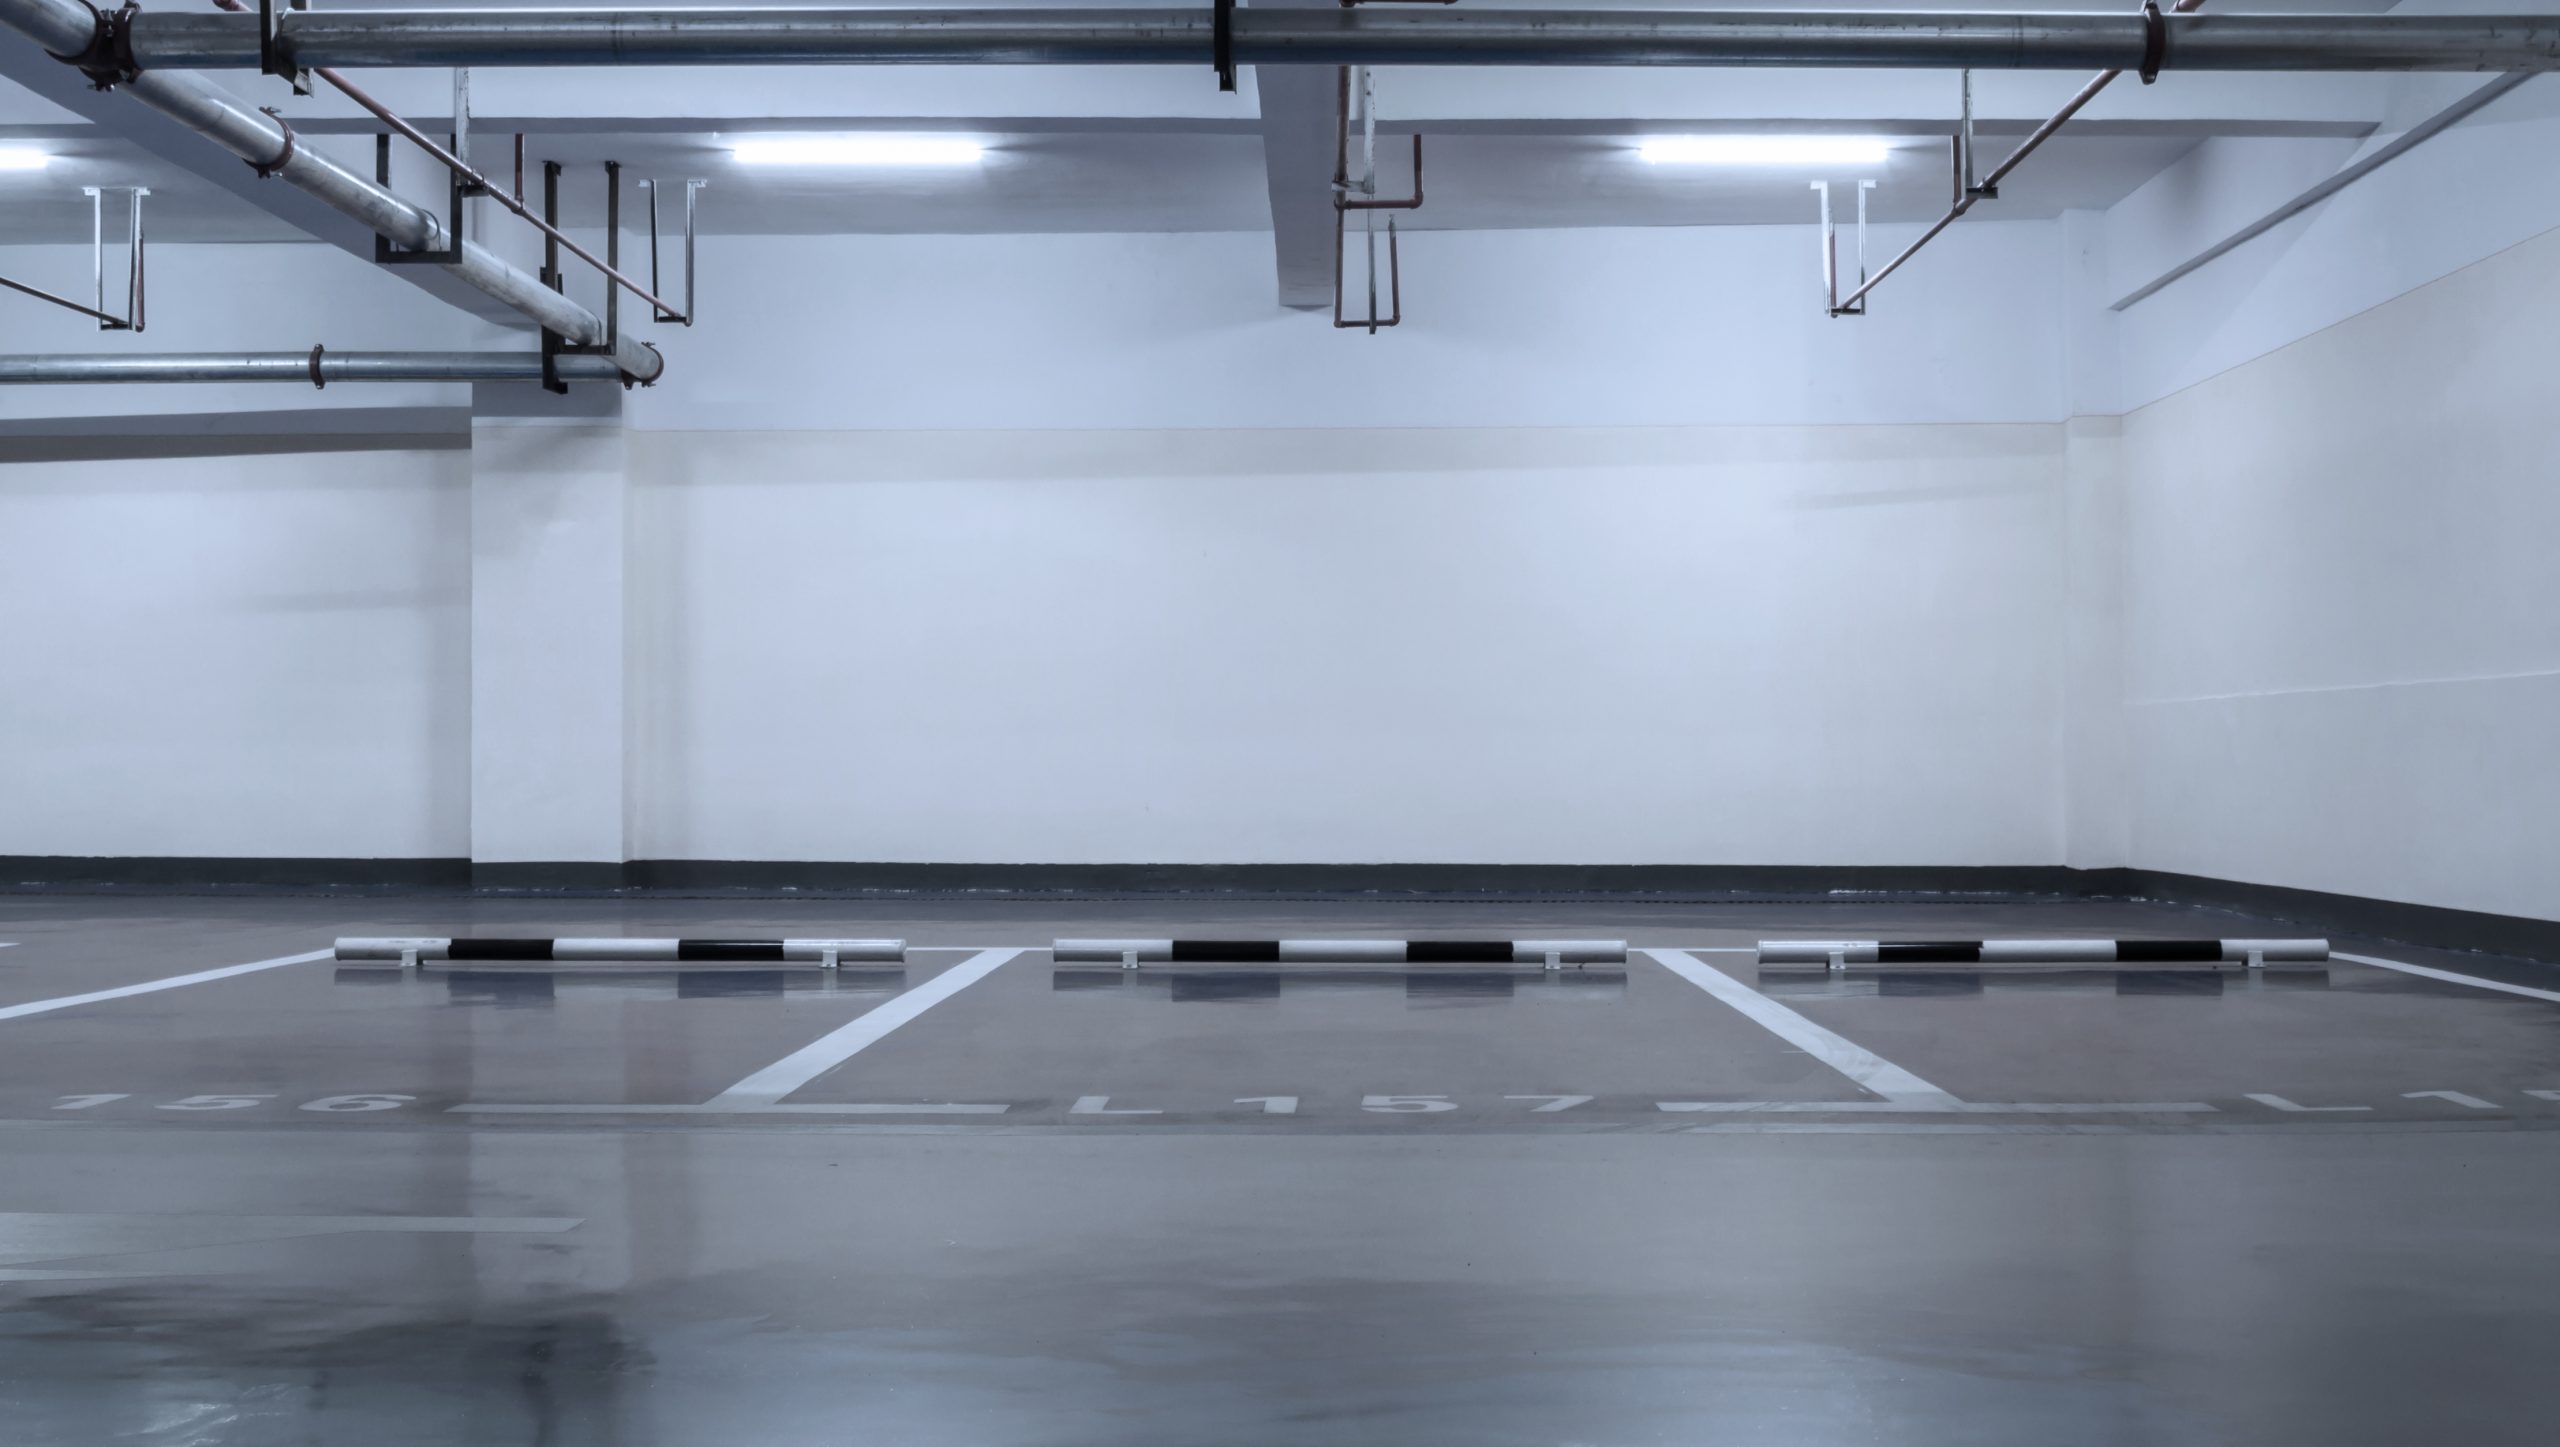 Garage Floor Coating Sydney: More Than Just a Floor Surface